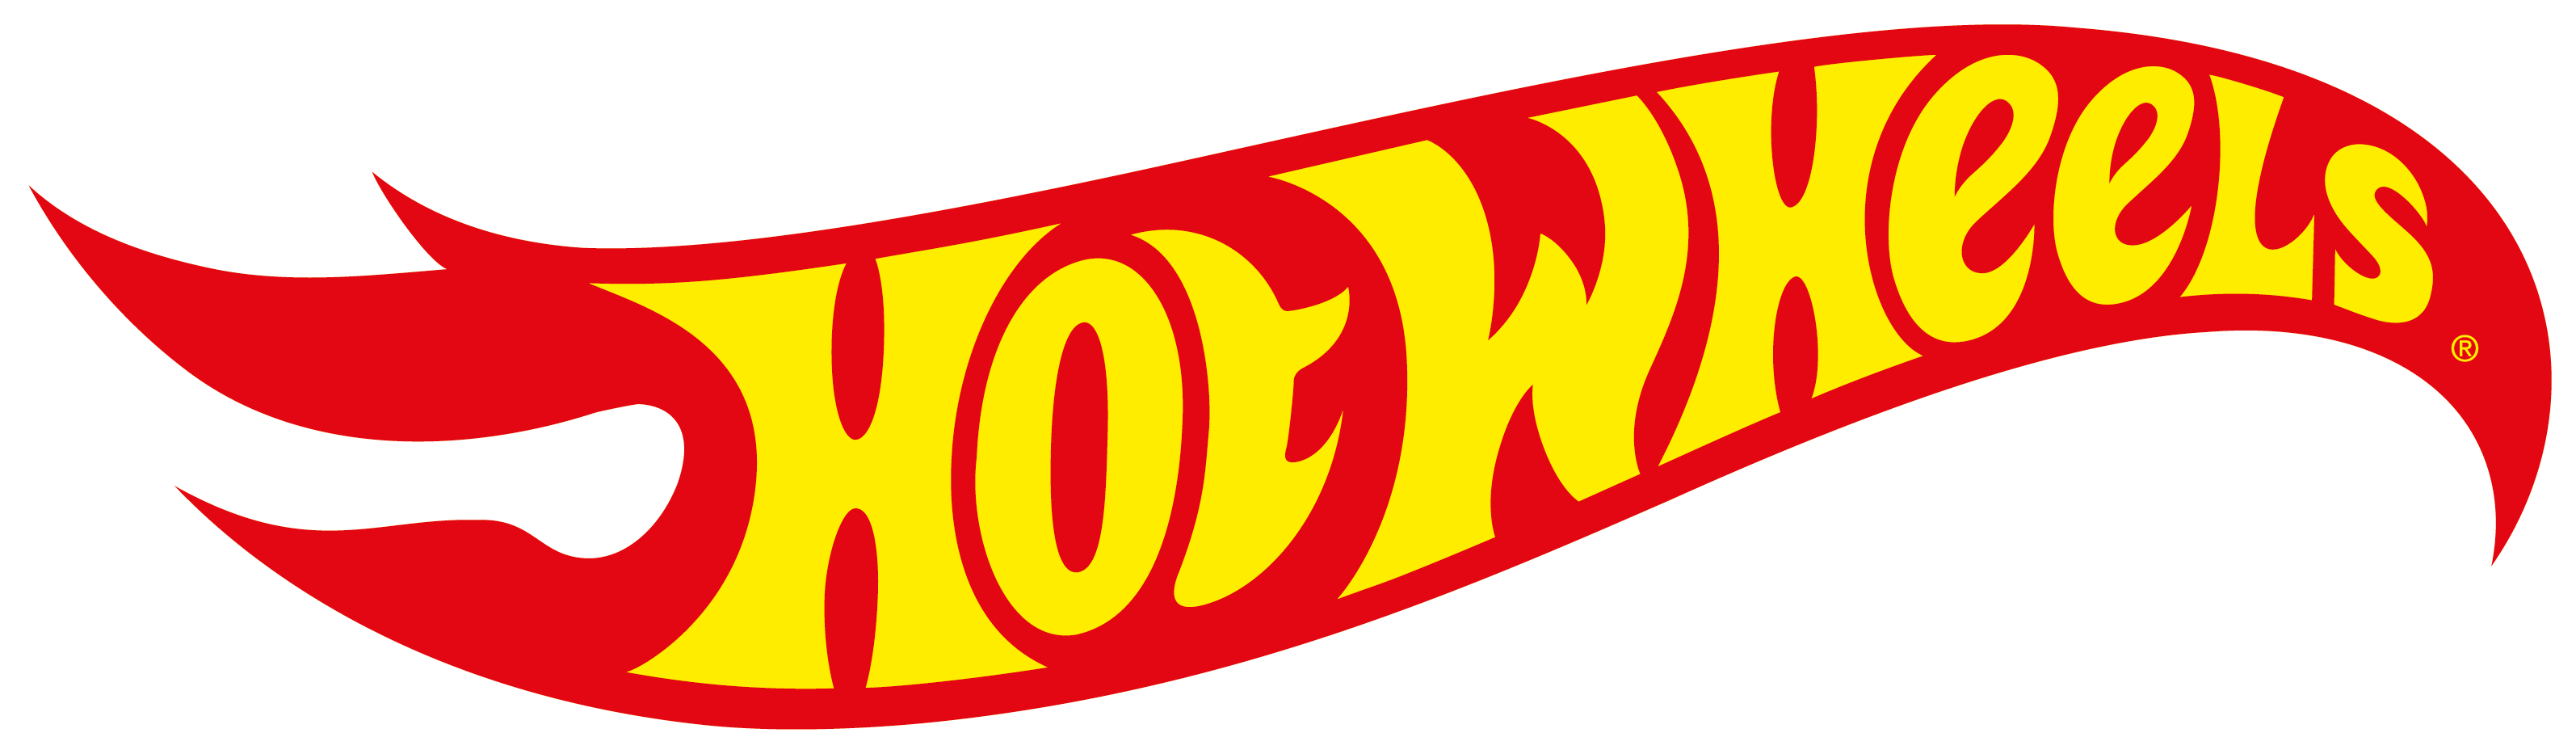 Hot Wheels Logo - Hot Wheels Logo 2017 (3189x933)